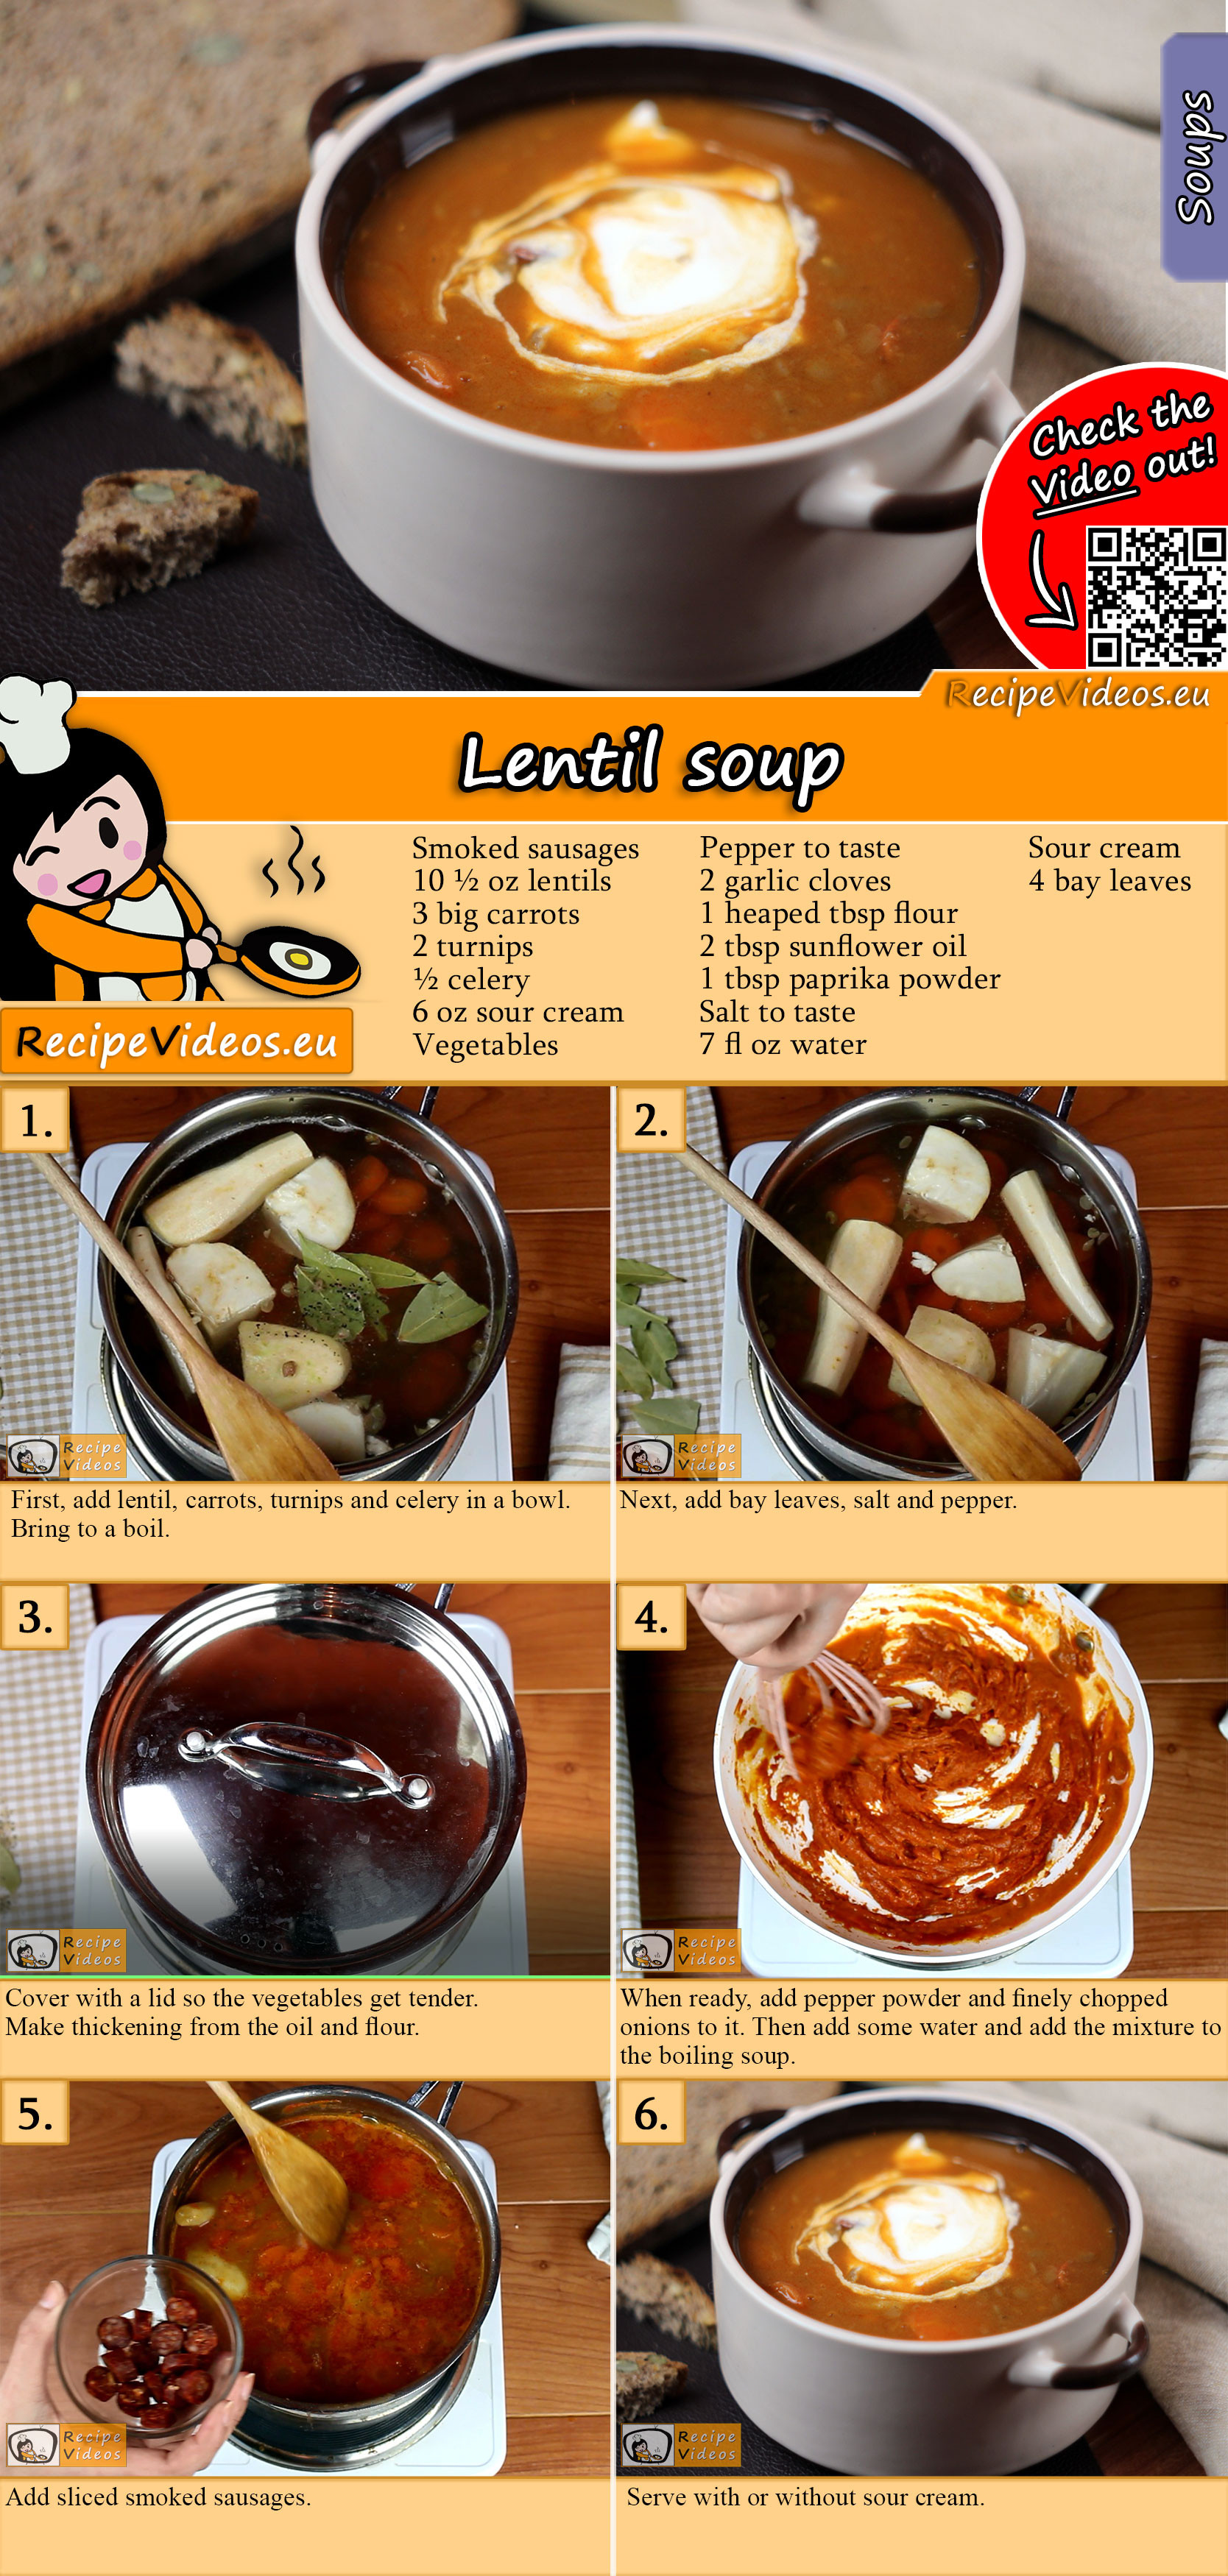 Lentil soup recipe with video